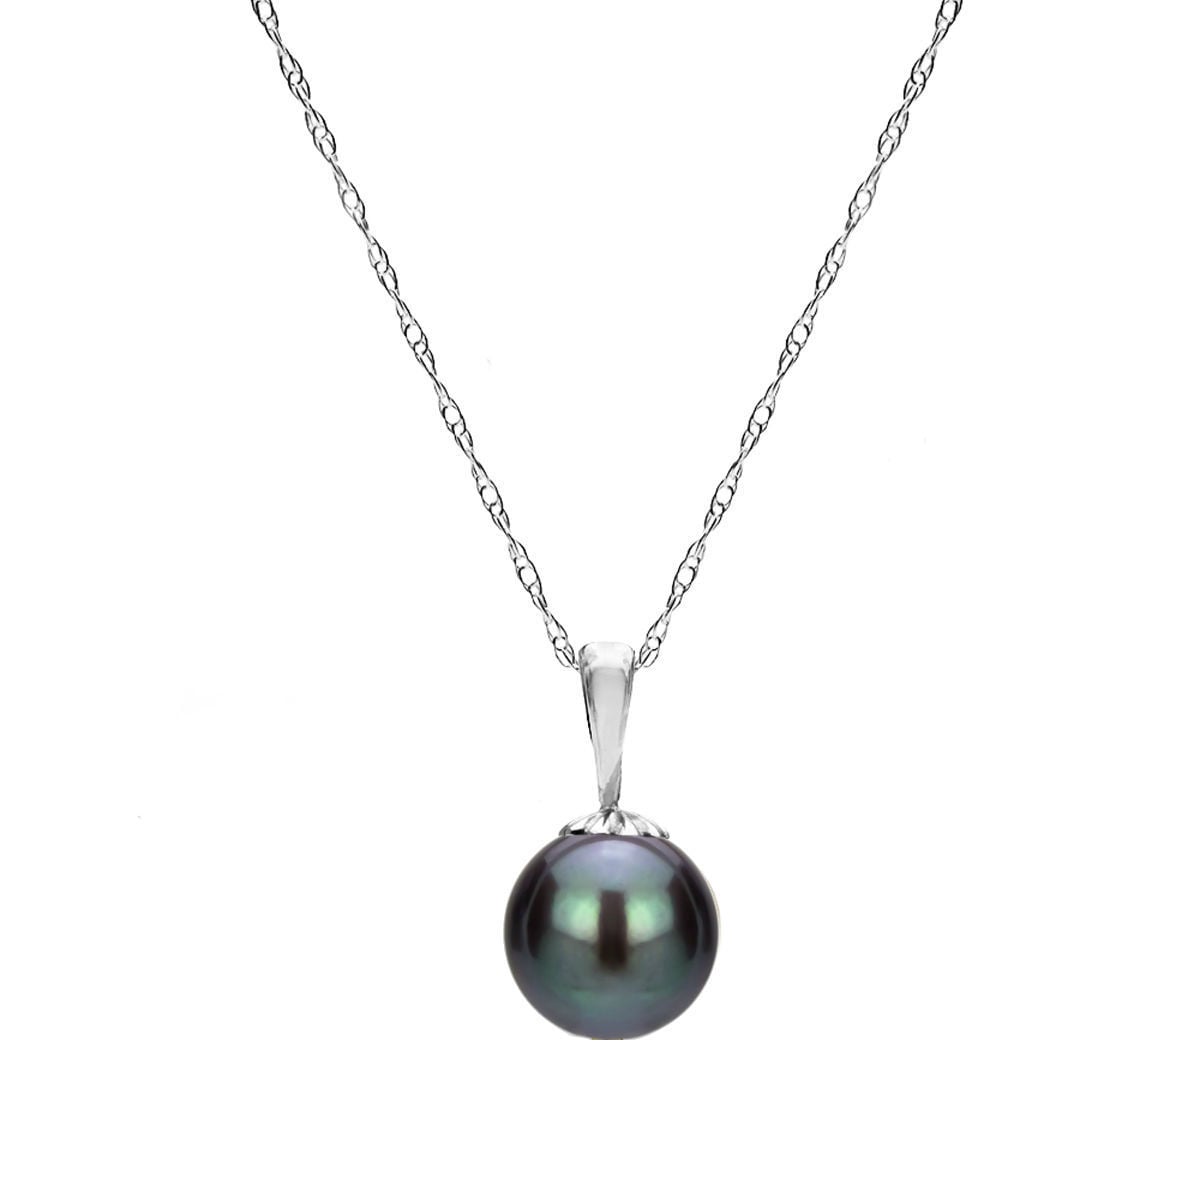 DaVonna 14k White Gold Black Round Freshwater Pearl Necklace Chain Pendant 18